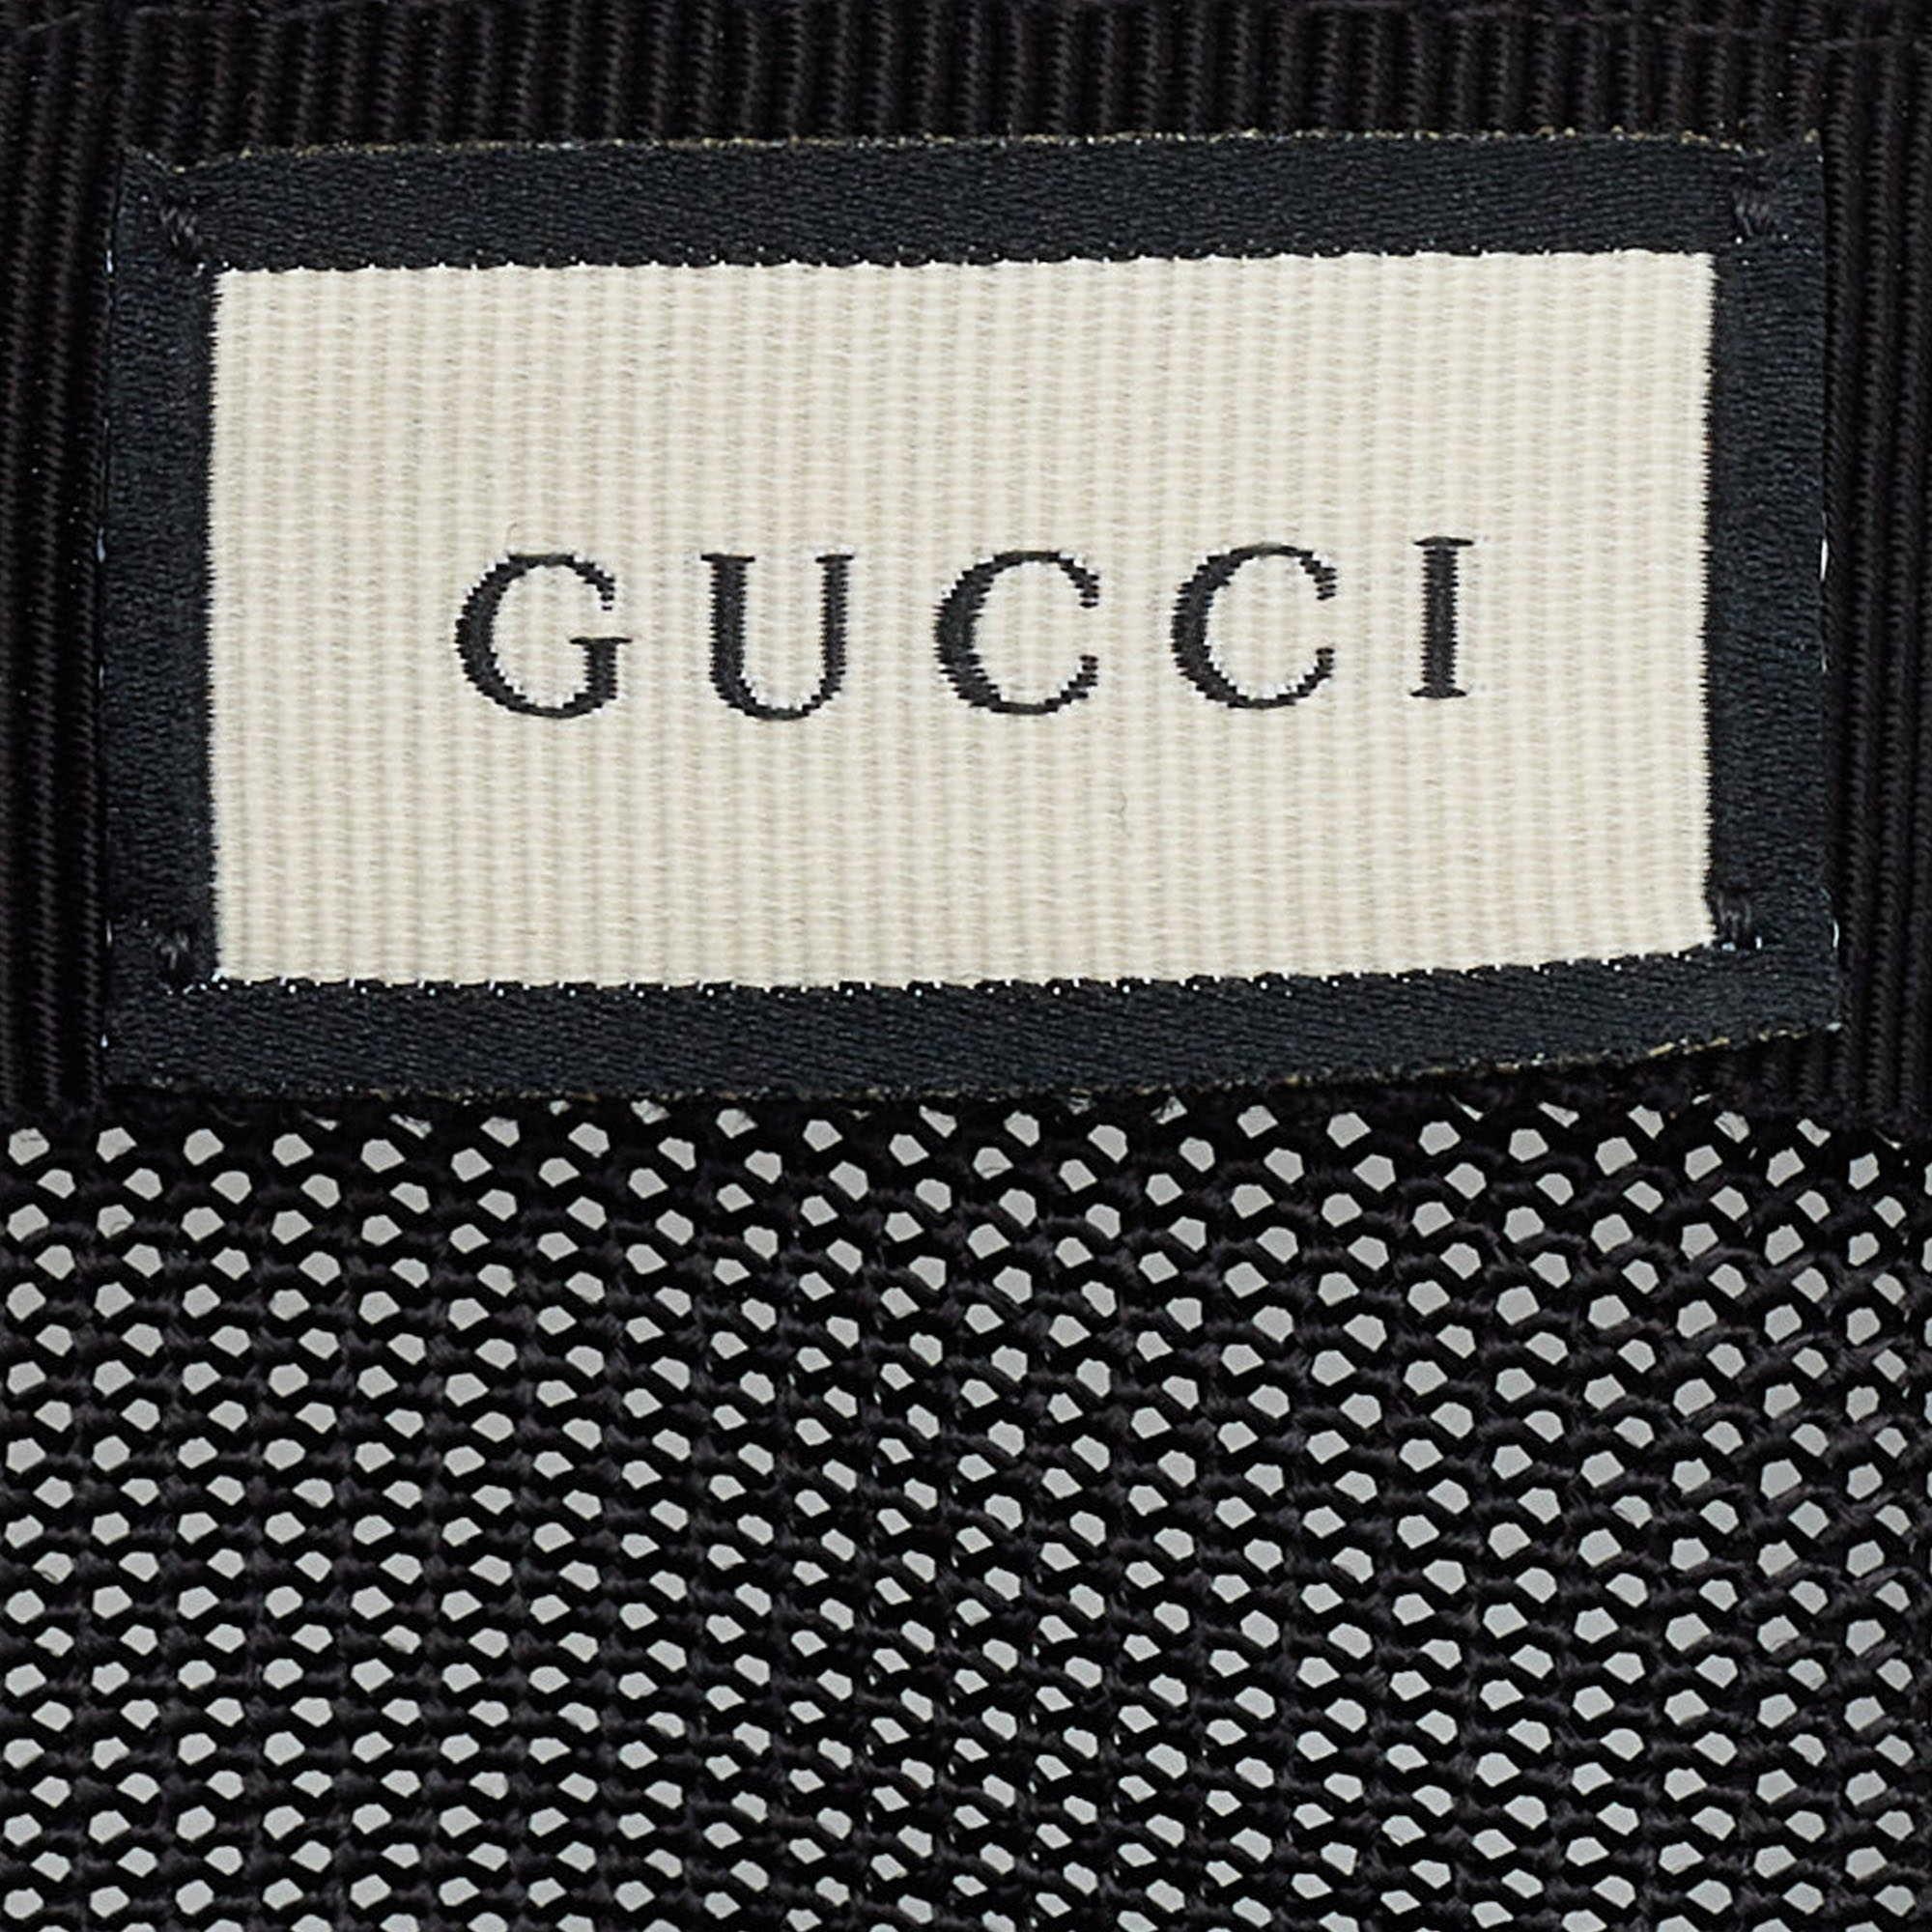 Gucci Black GG Nylon & Mesh Baseball Cap XL